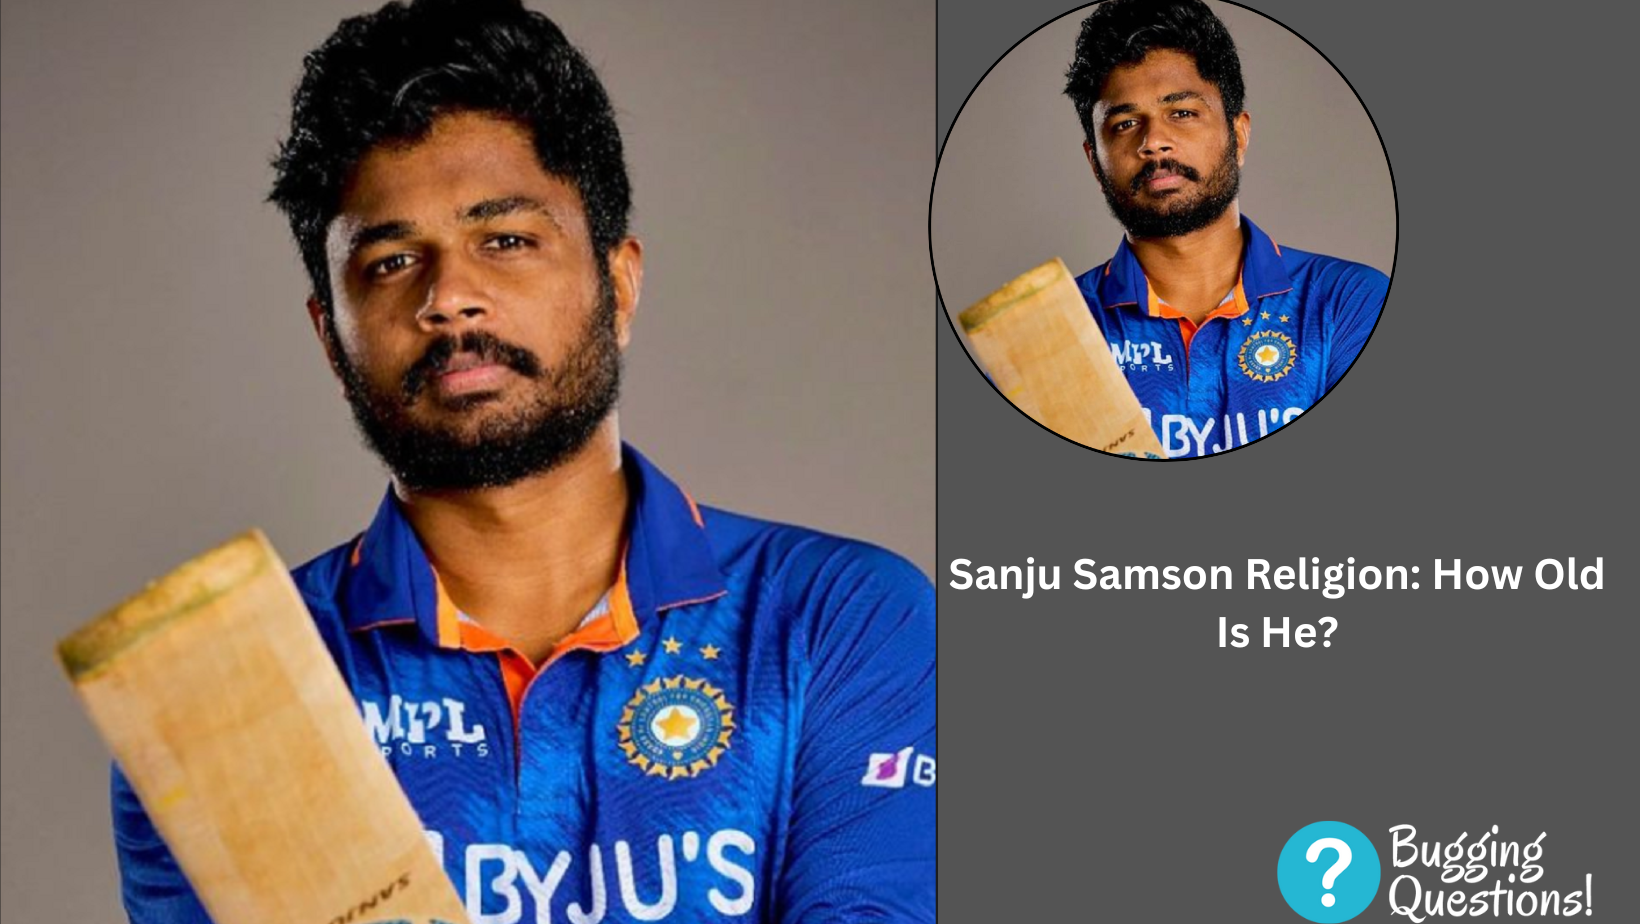 Sanju Samson Religion: How Old Is He?